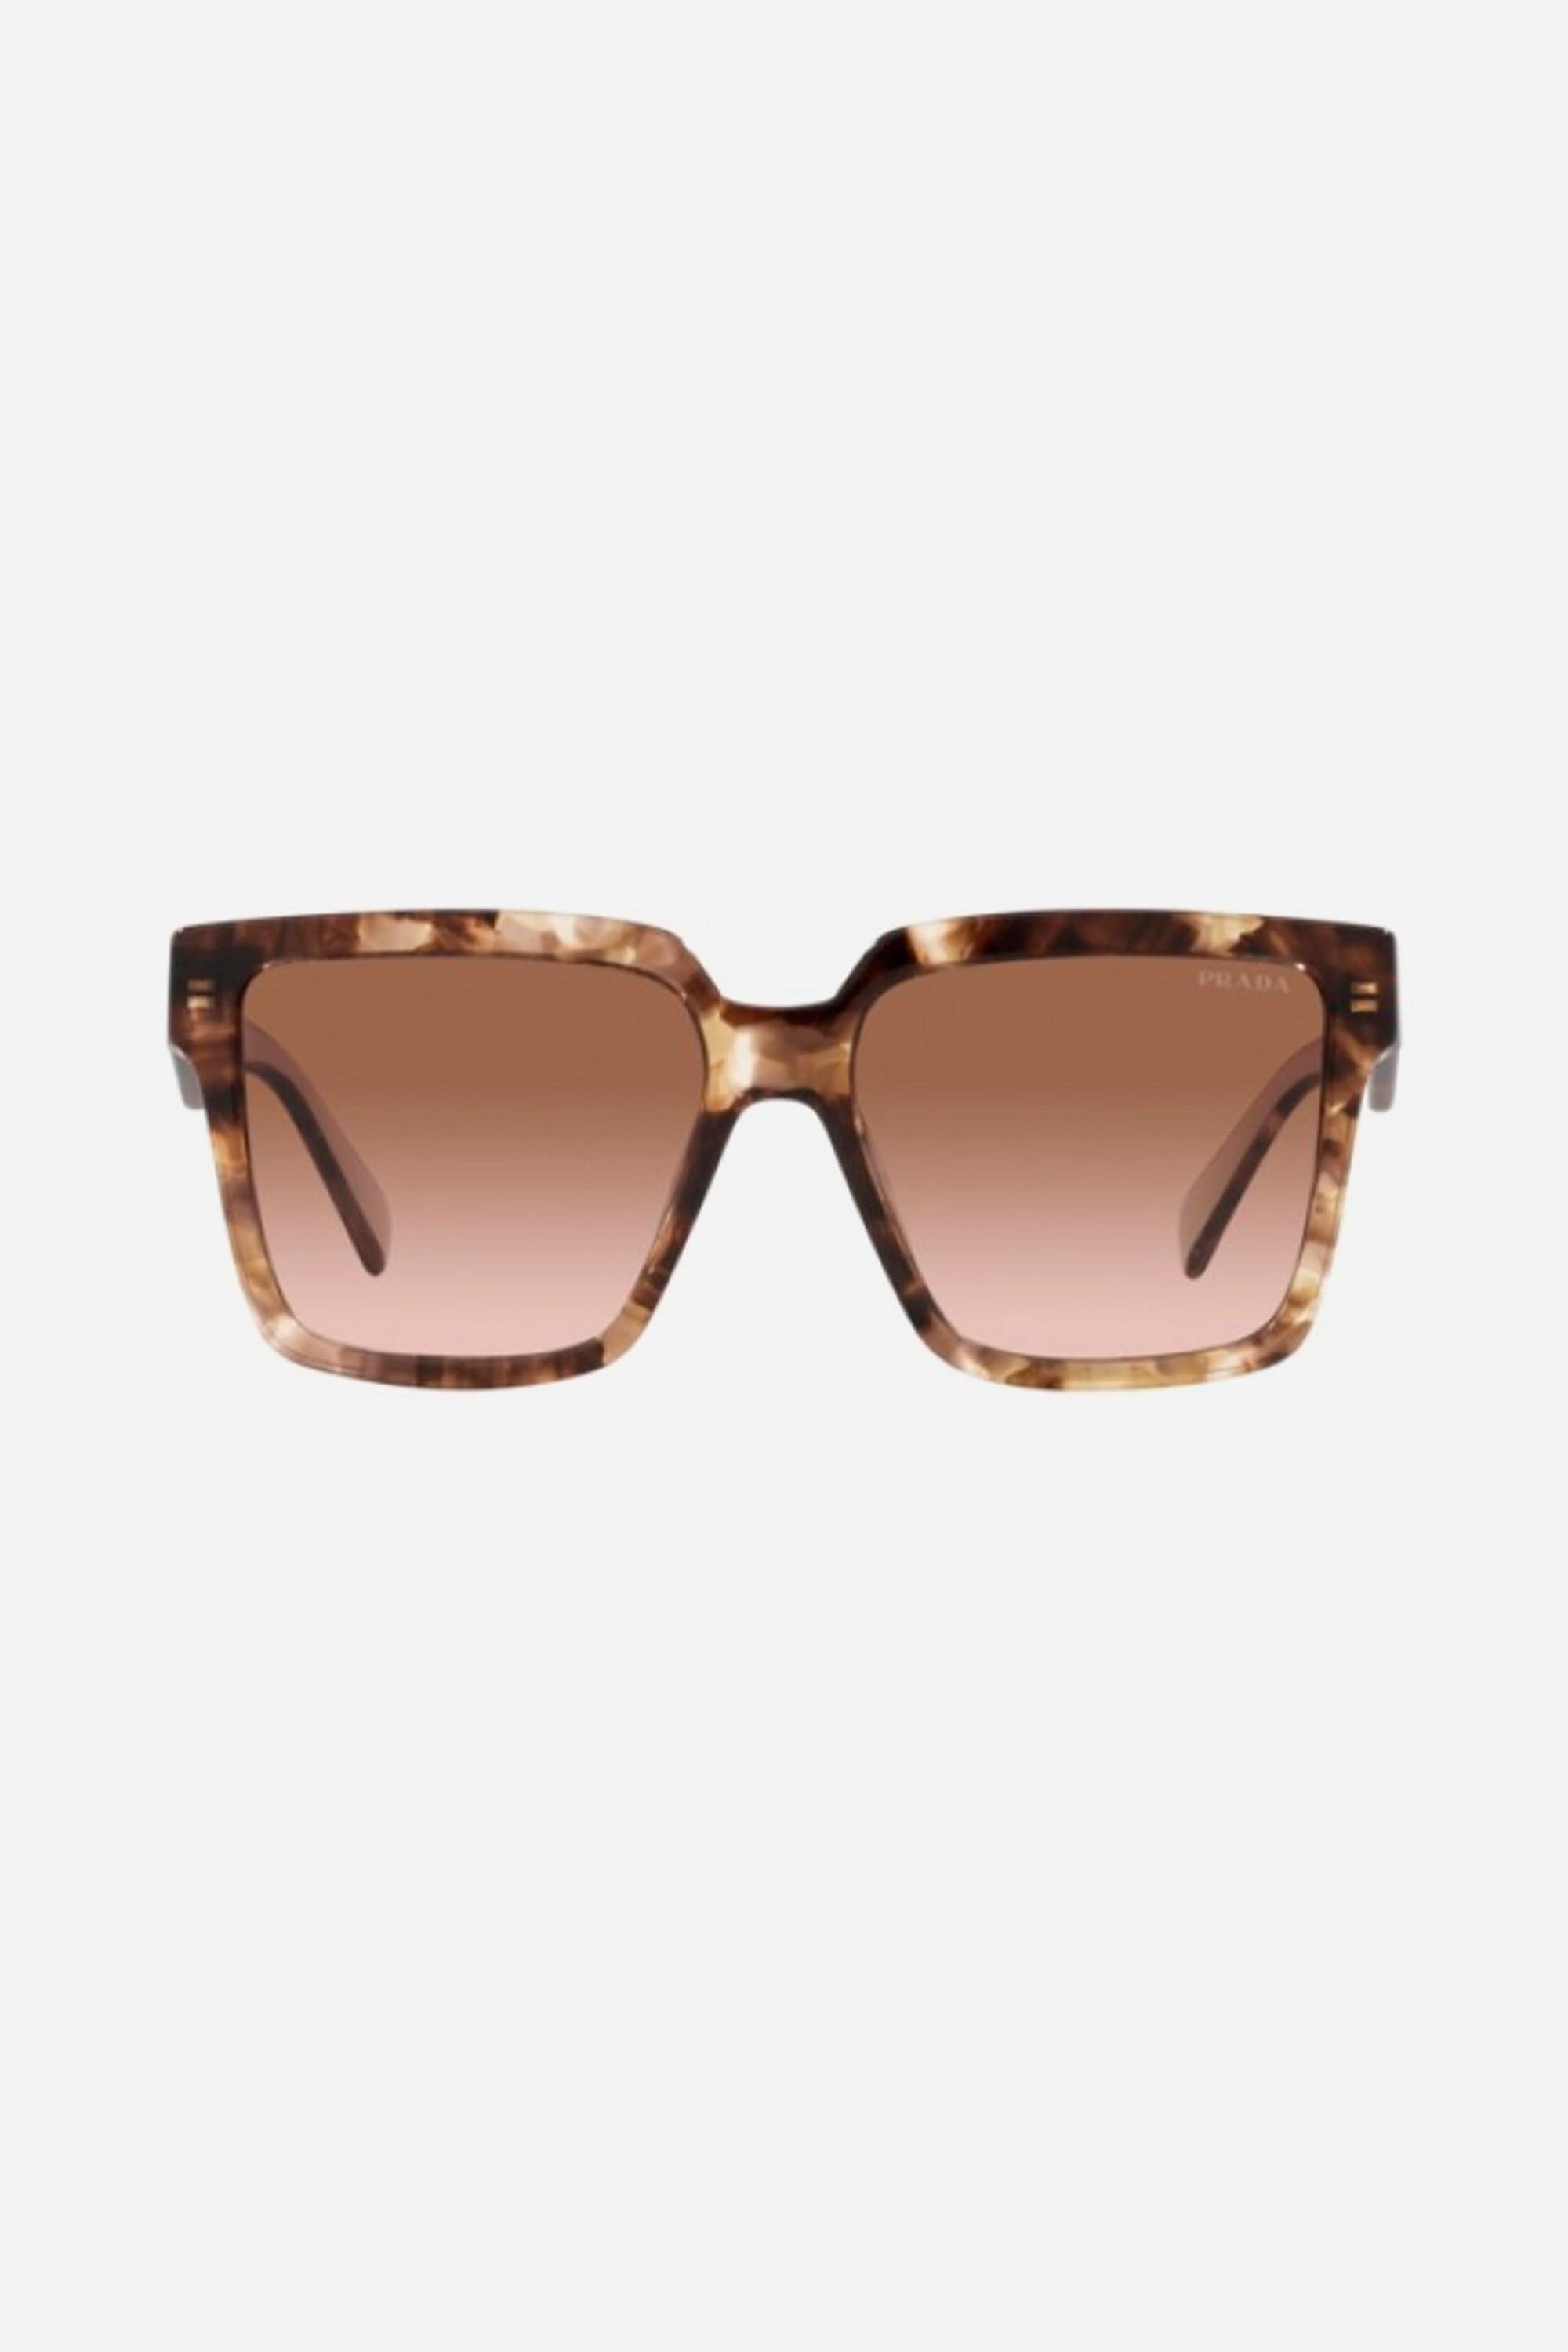 Prada PR 24ZS over cat eye havana and pink sunglasses - Eyewear Club